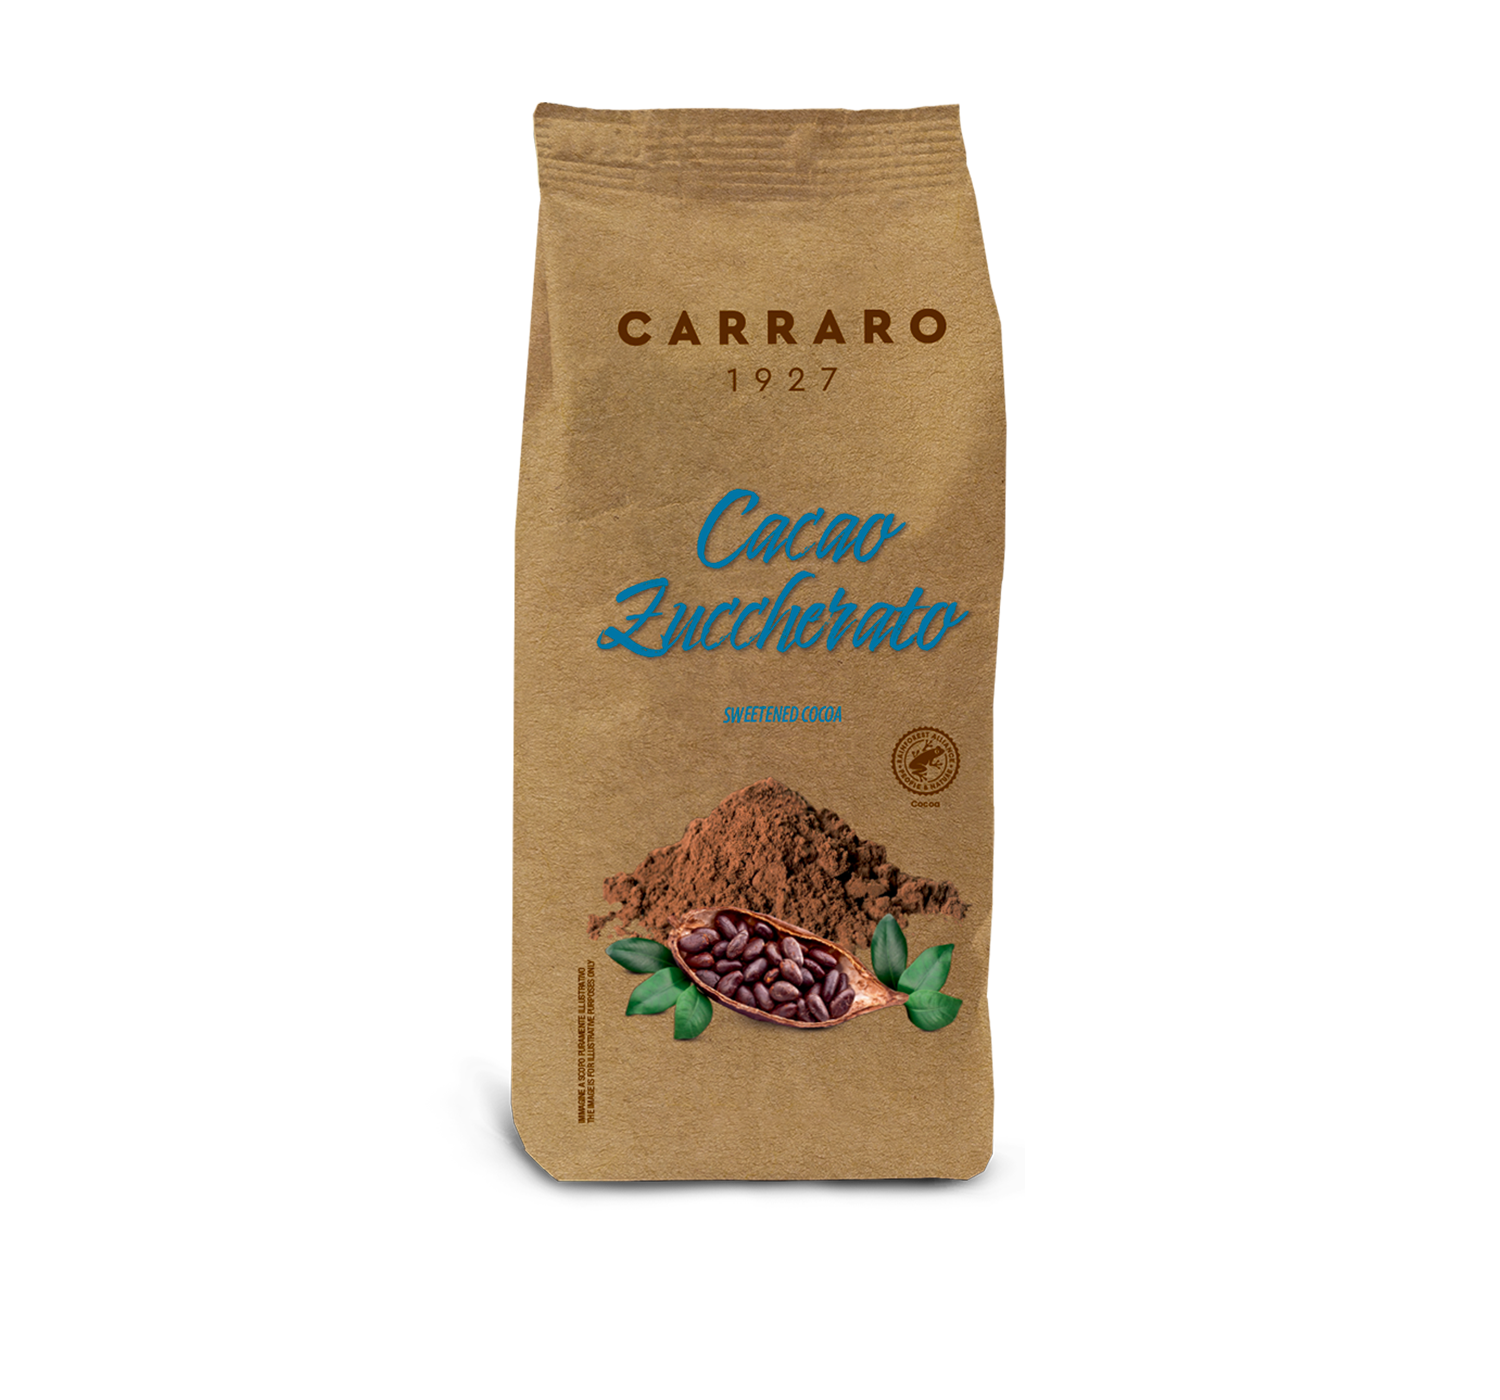 Casa - Cacao zuccherato – 500 g - Shop online Caffè Carraro